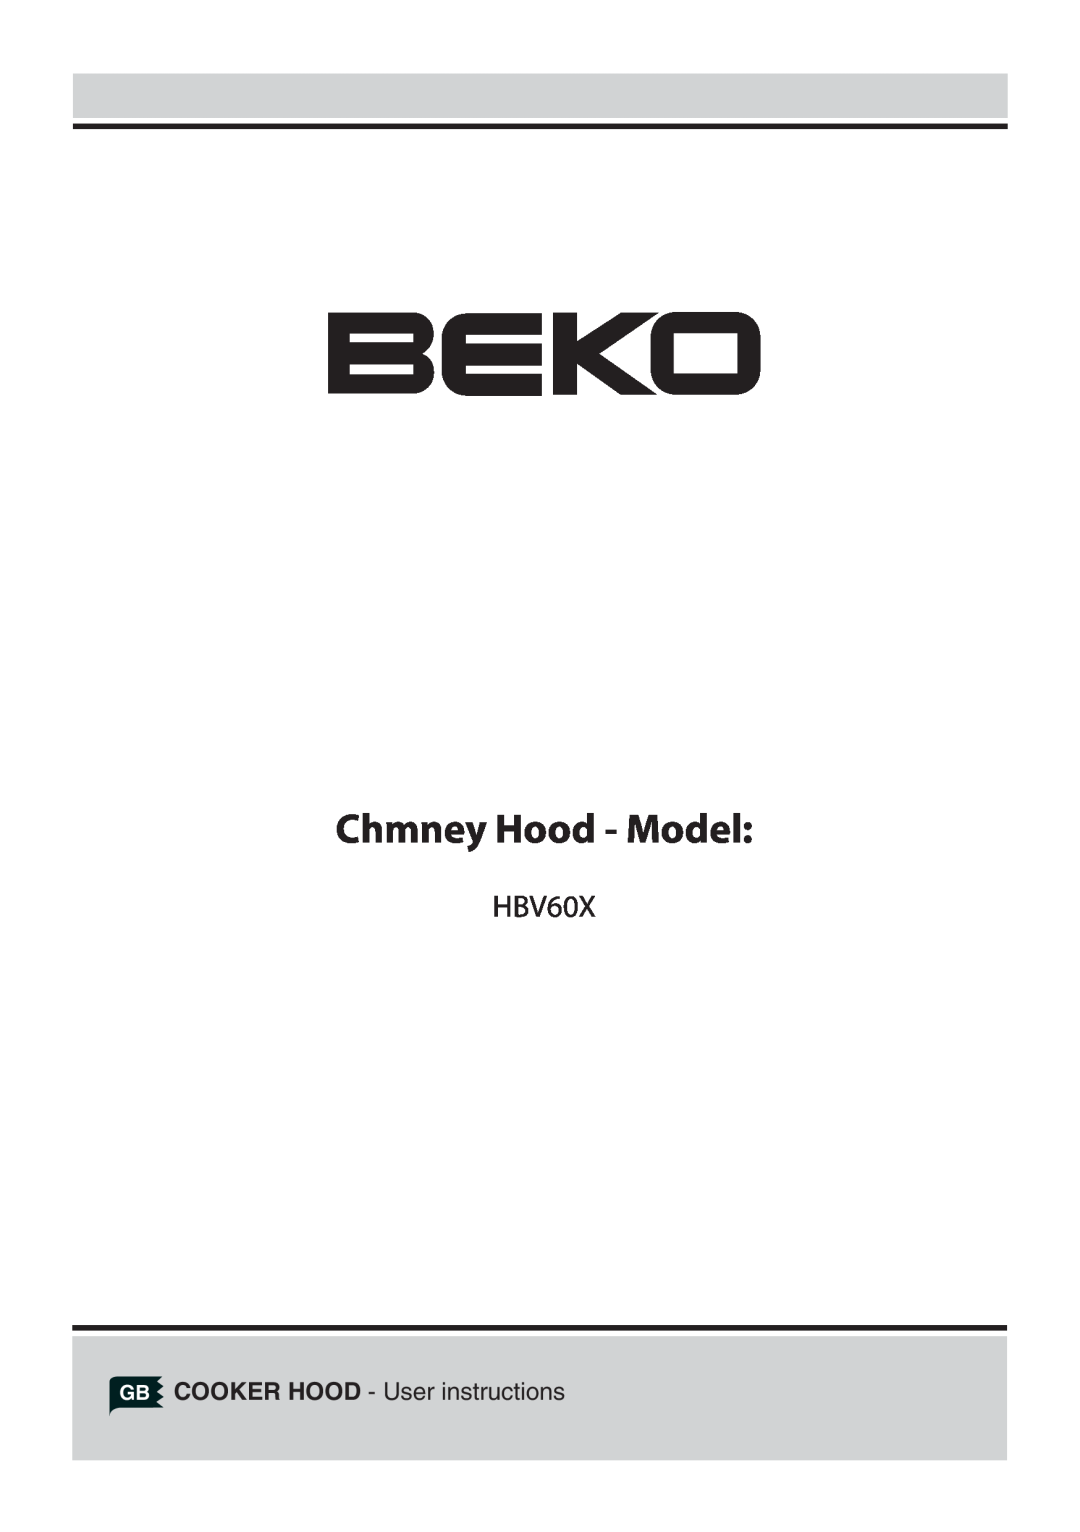 Beko HBV60X manual Chmney Hood - Model, GB COOKER HOOD - User instructions 